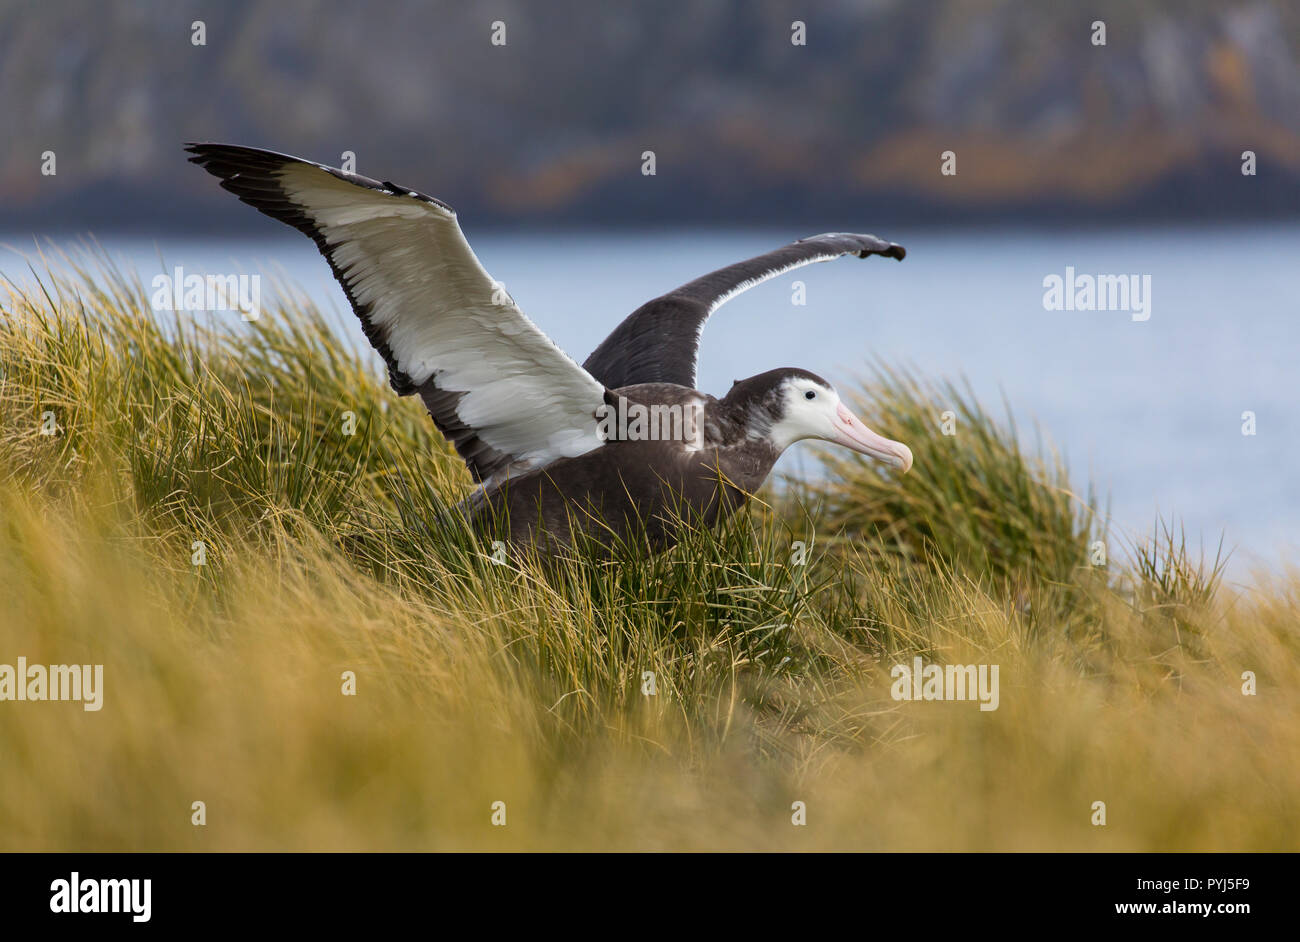 Wandering Albatross, Prion Island, South Georgia, Antarctica. Stock Photo